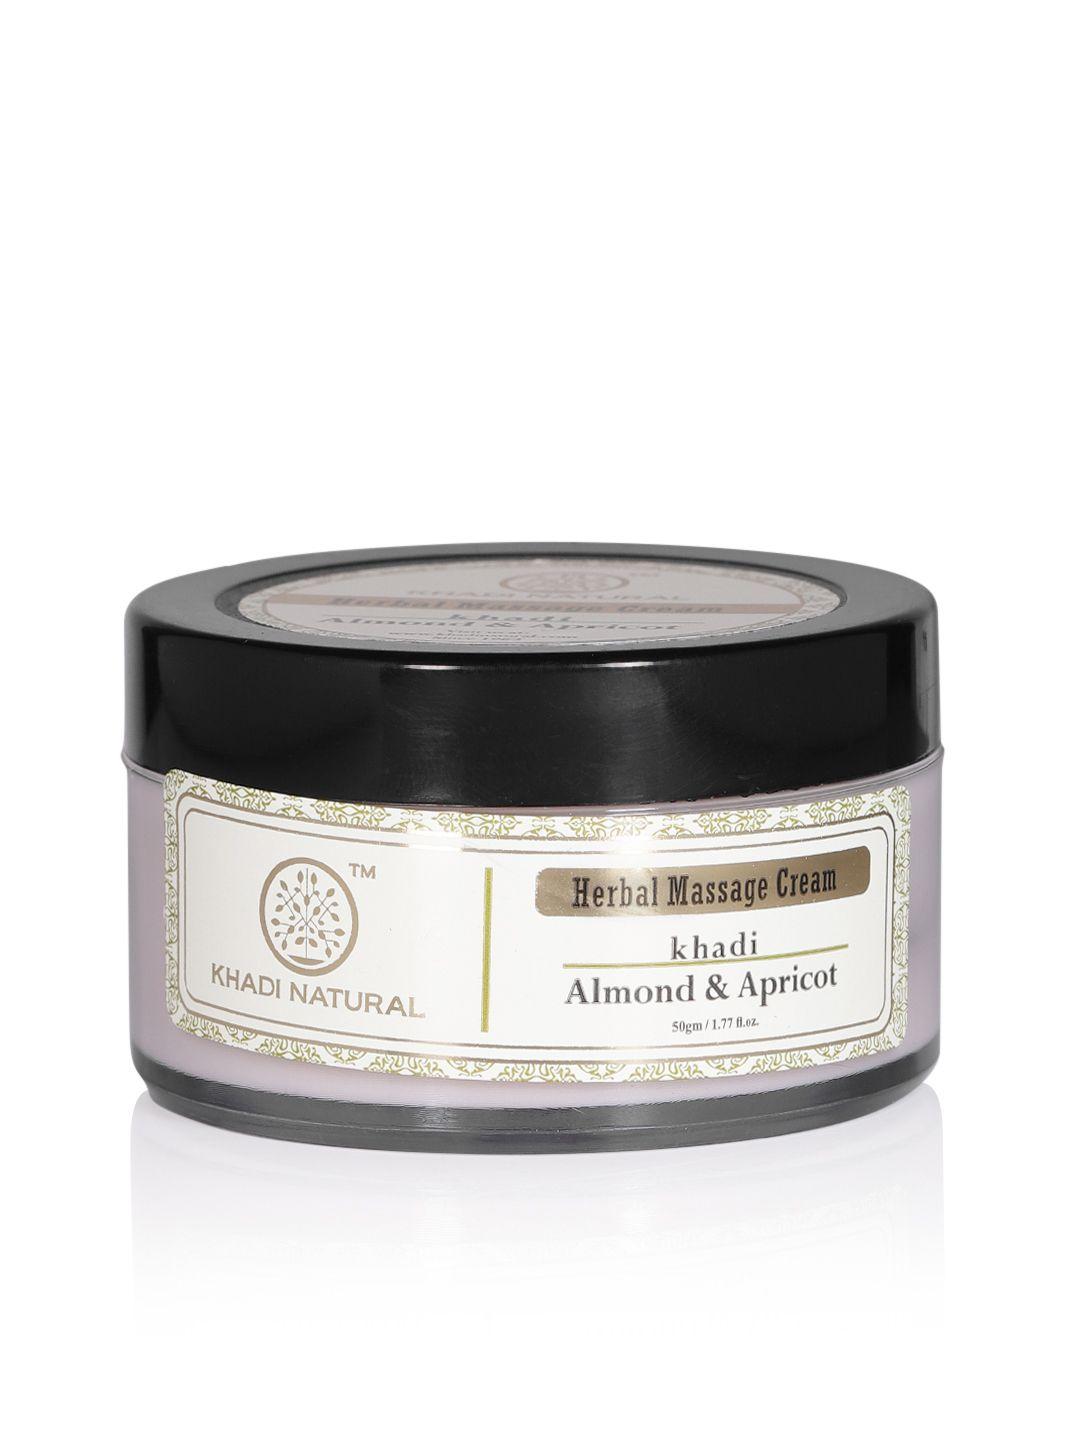 khadi natural almond & apricot sustainable massage cream 50 g